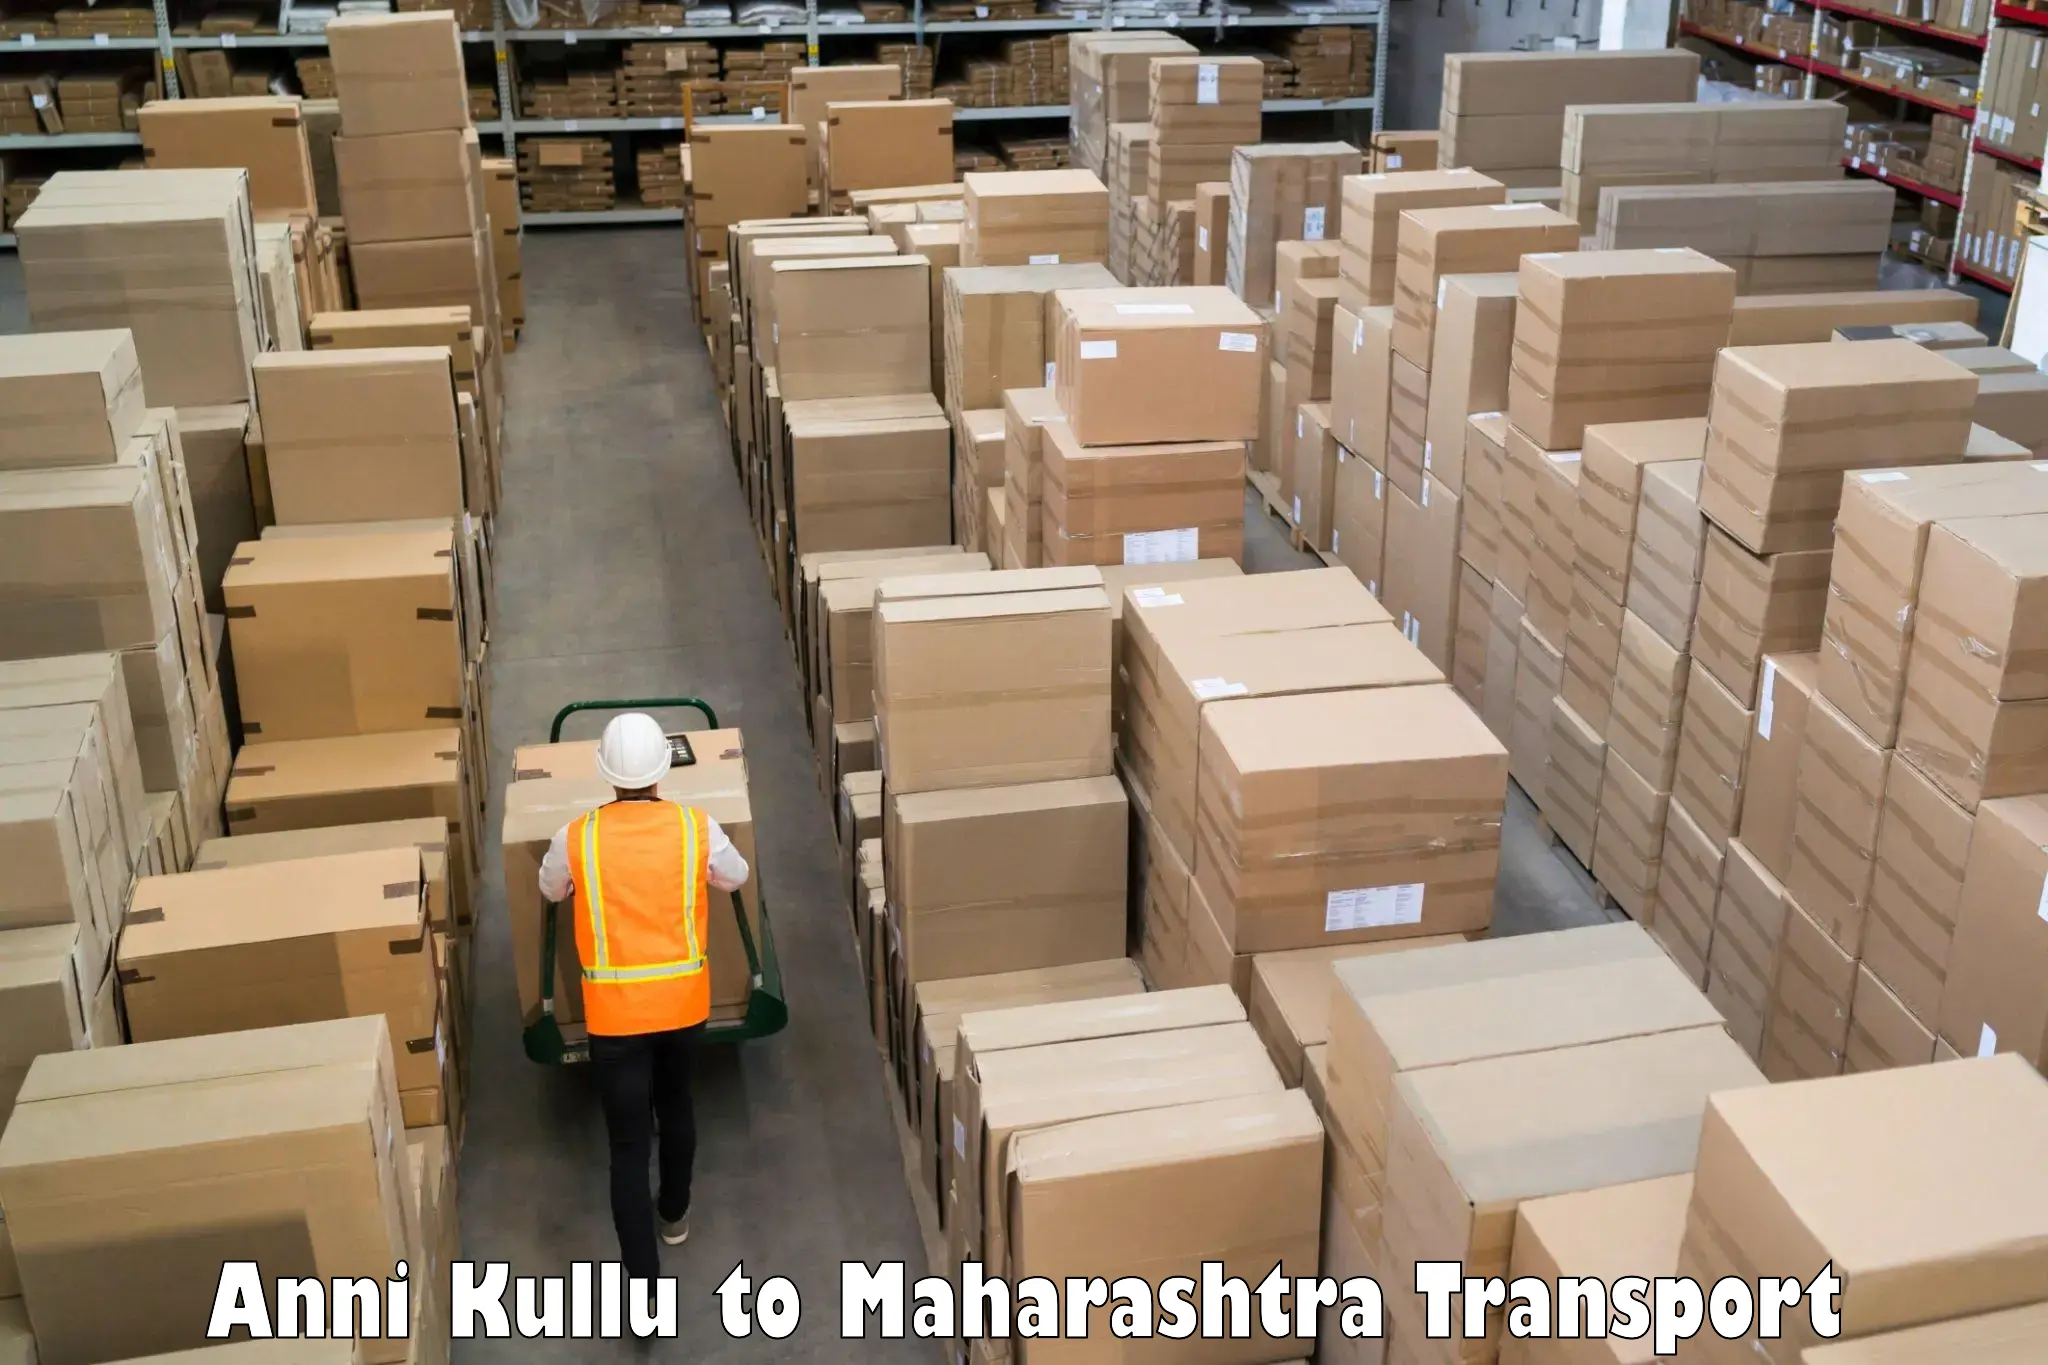 Commercial transport service Anni Kullu to Andheri